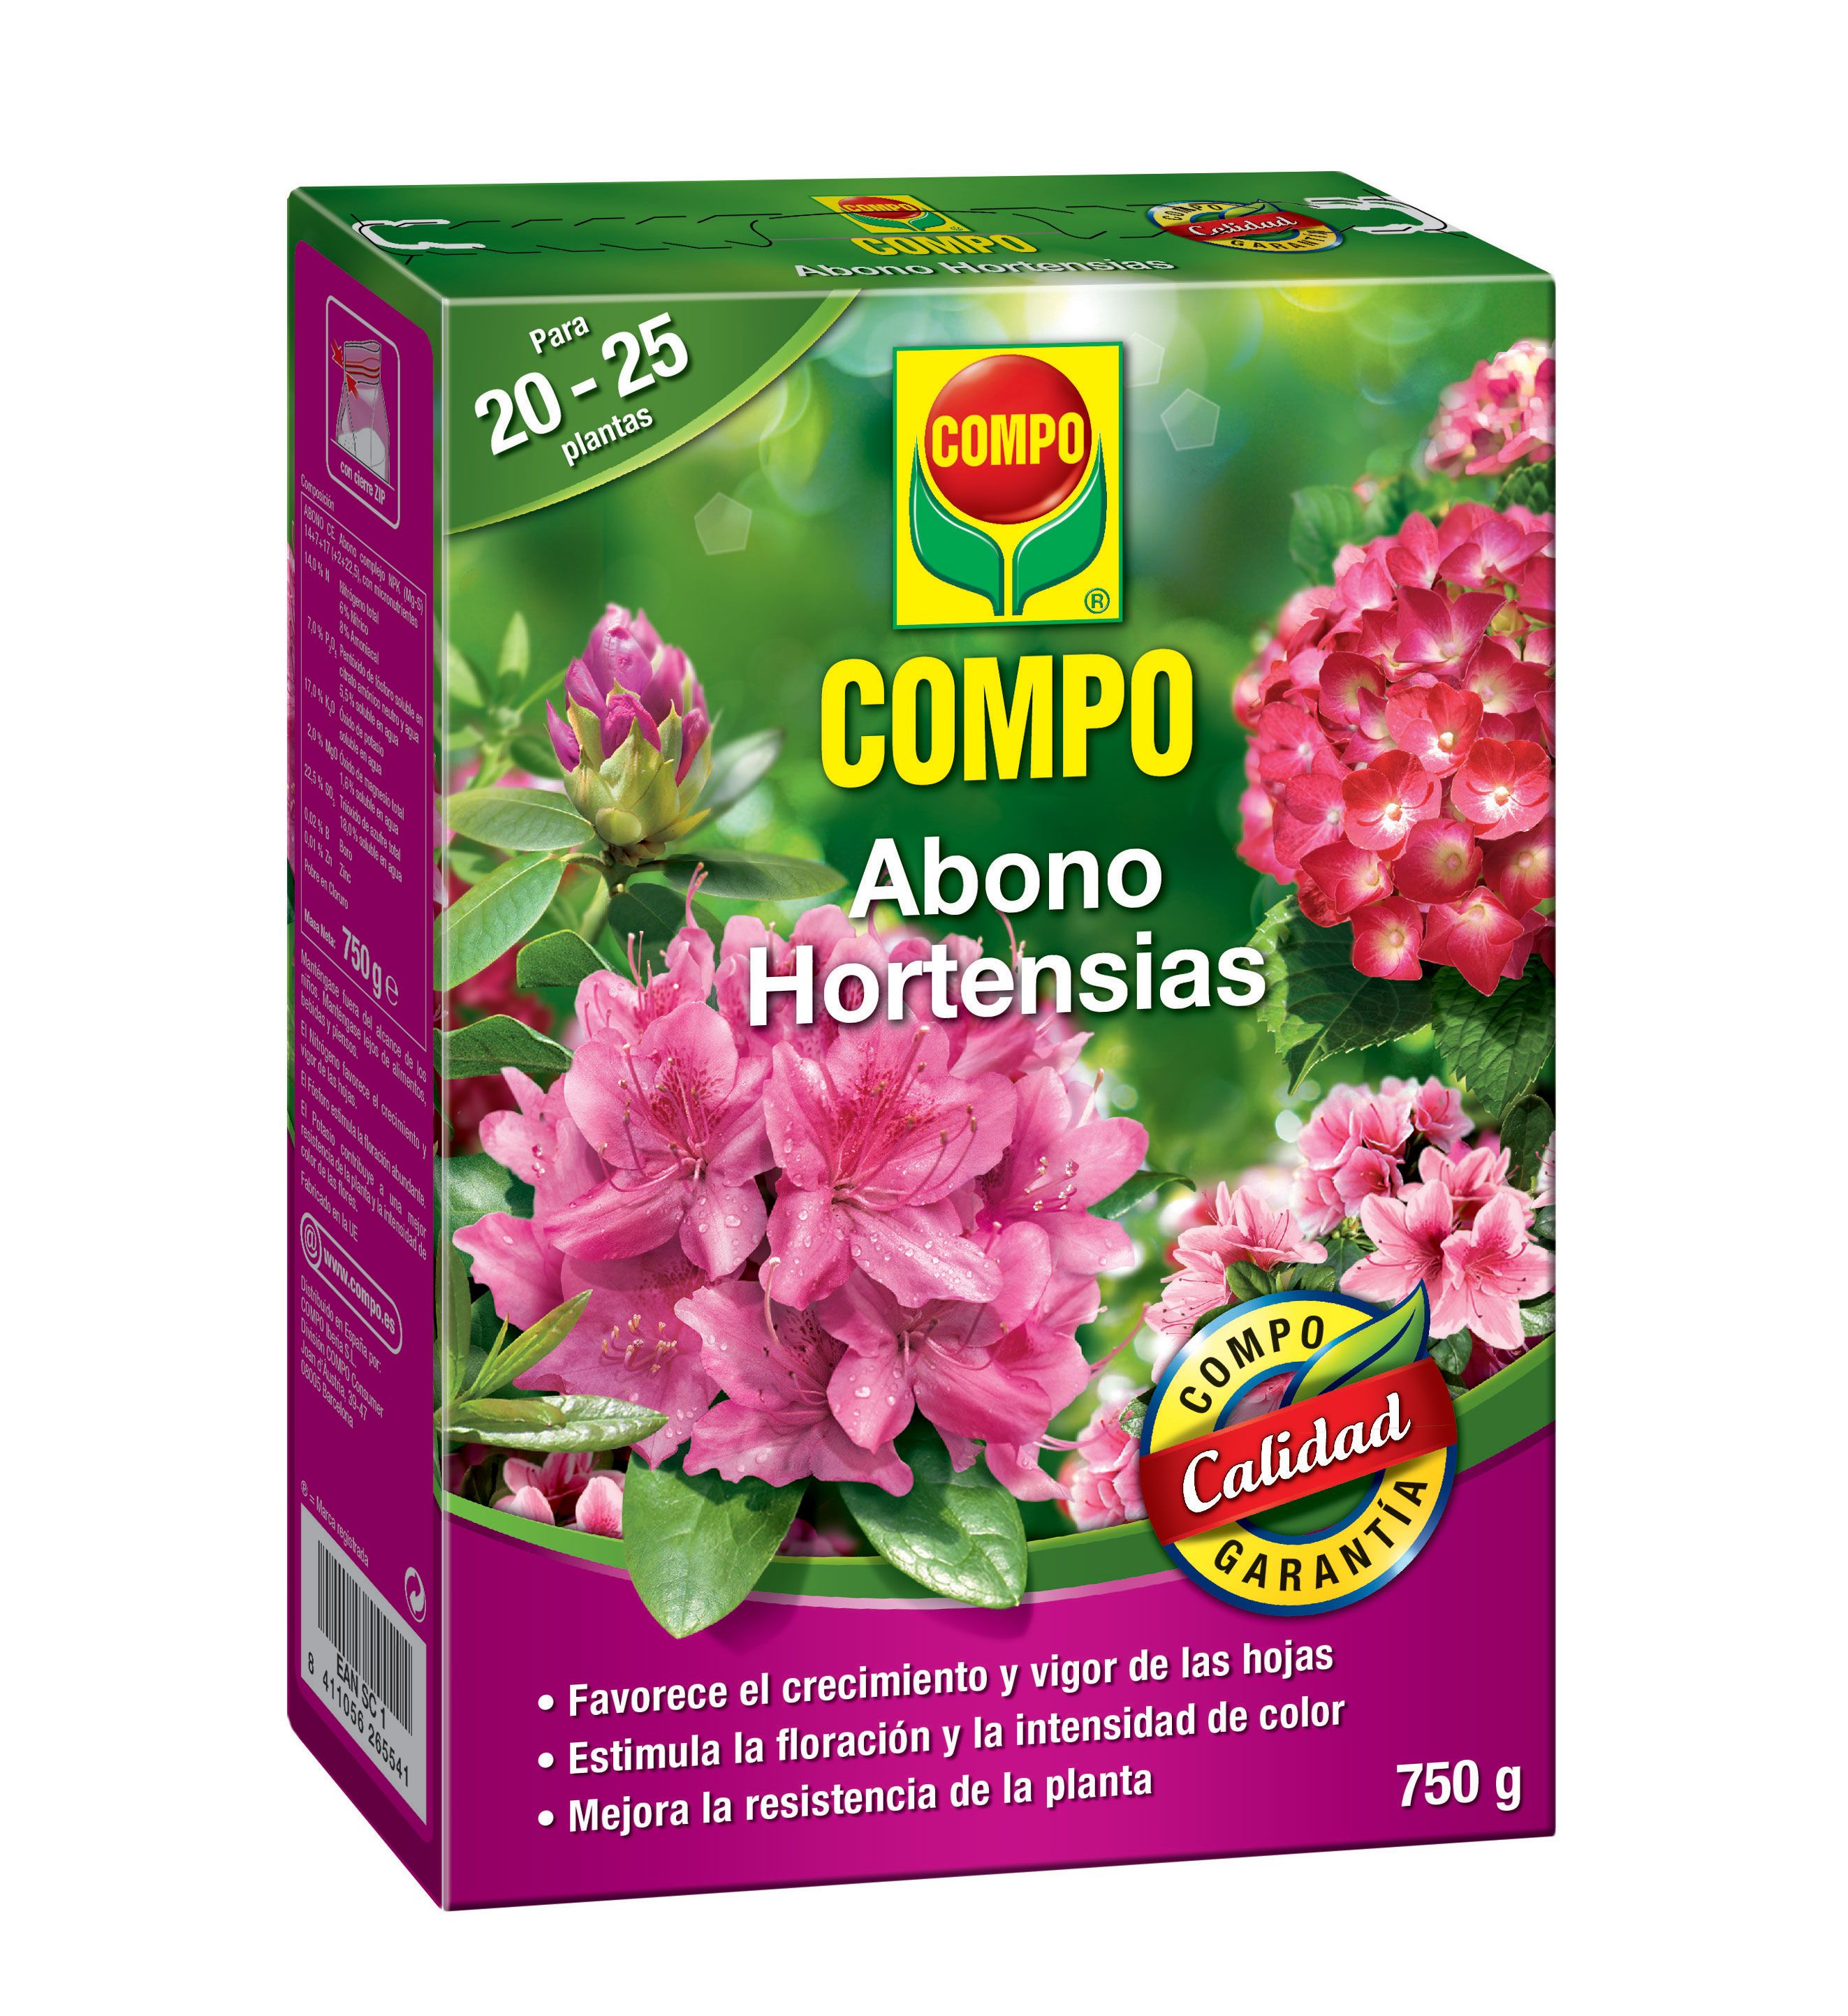 Compo Nitrophoska® Hortensias Estuche 750g | Jardinería Ferromar